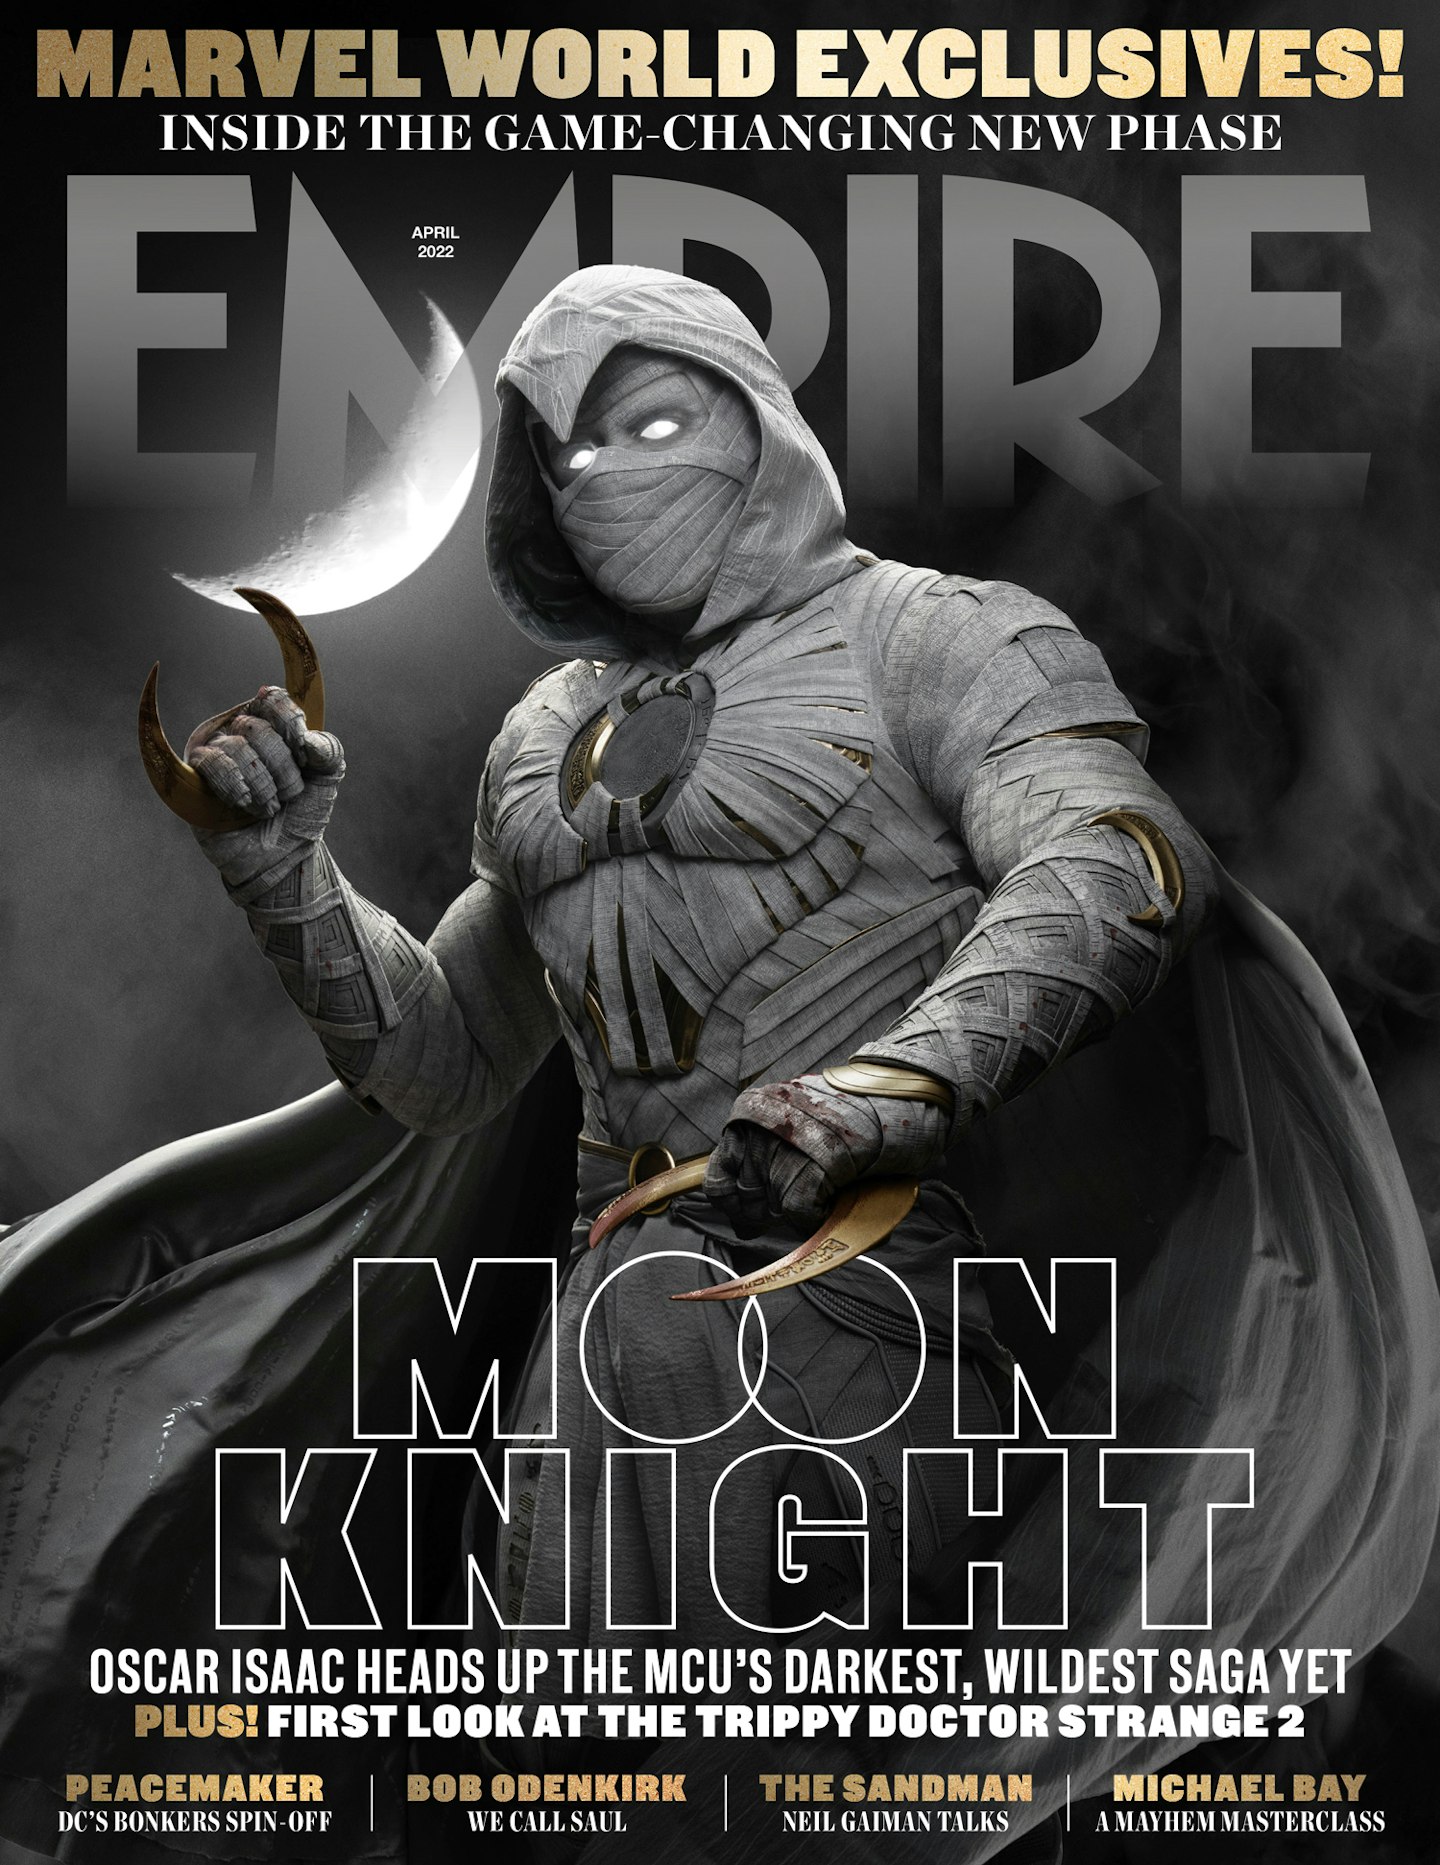 Moon Knight Season 1 Featurette